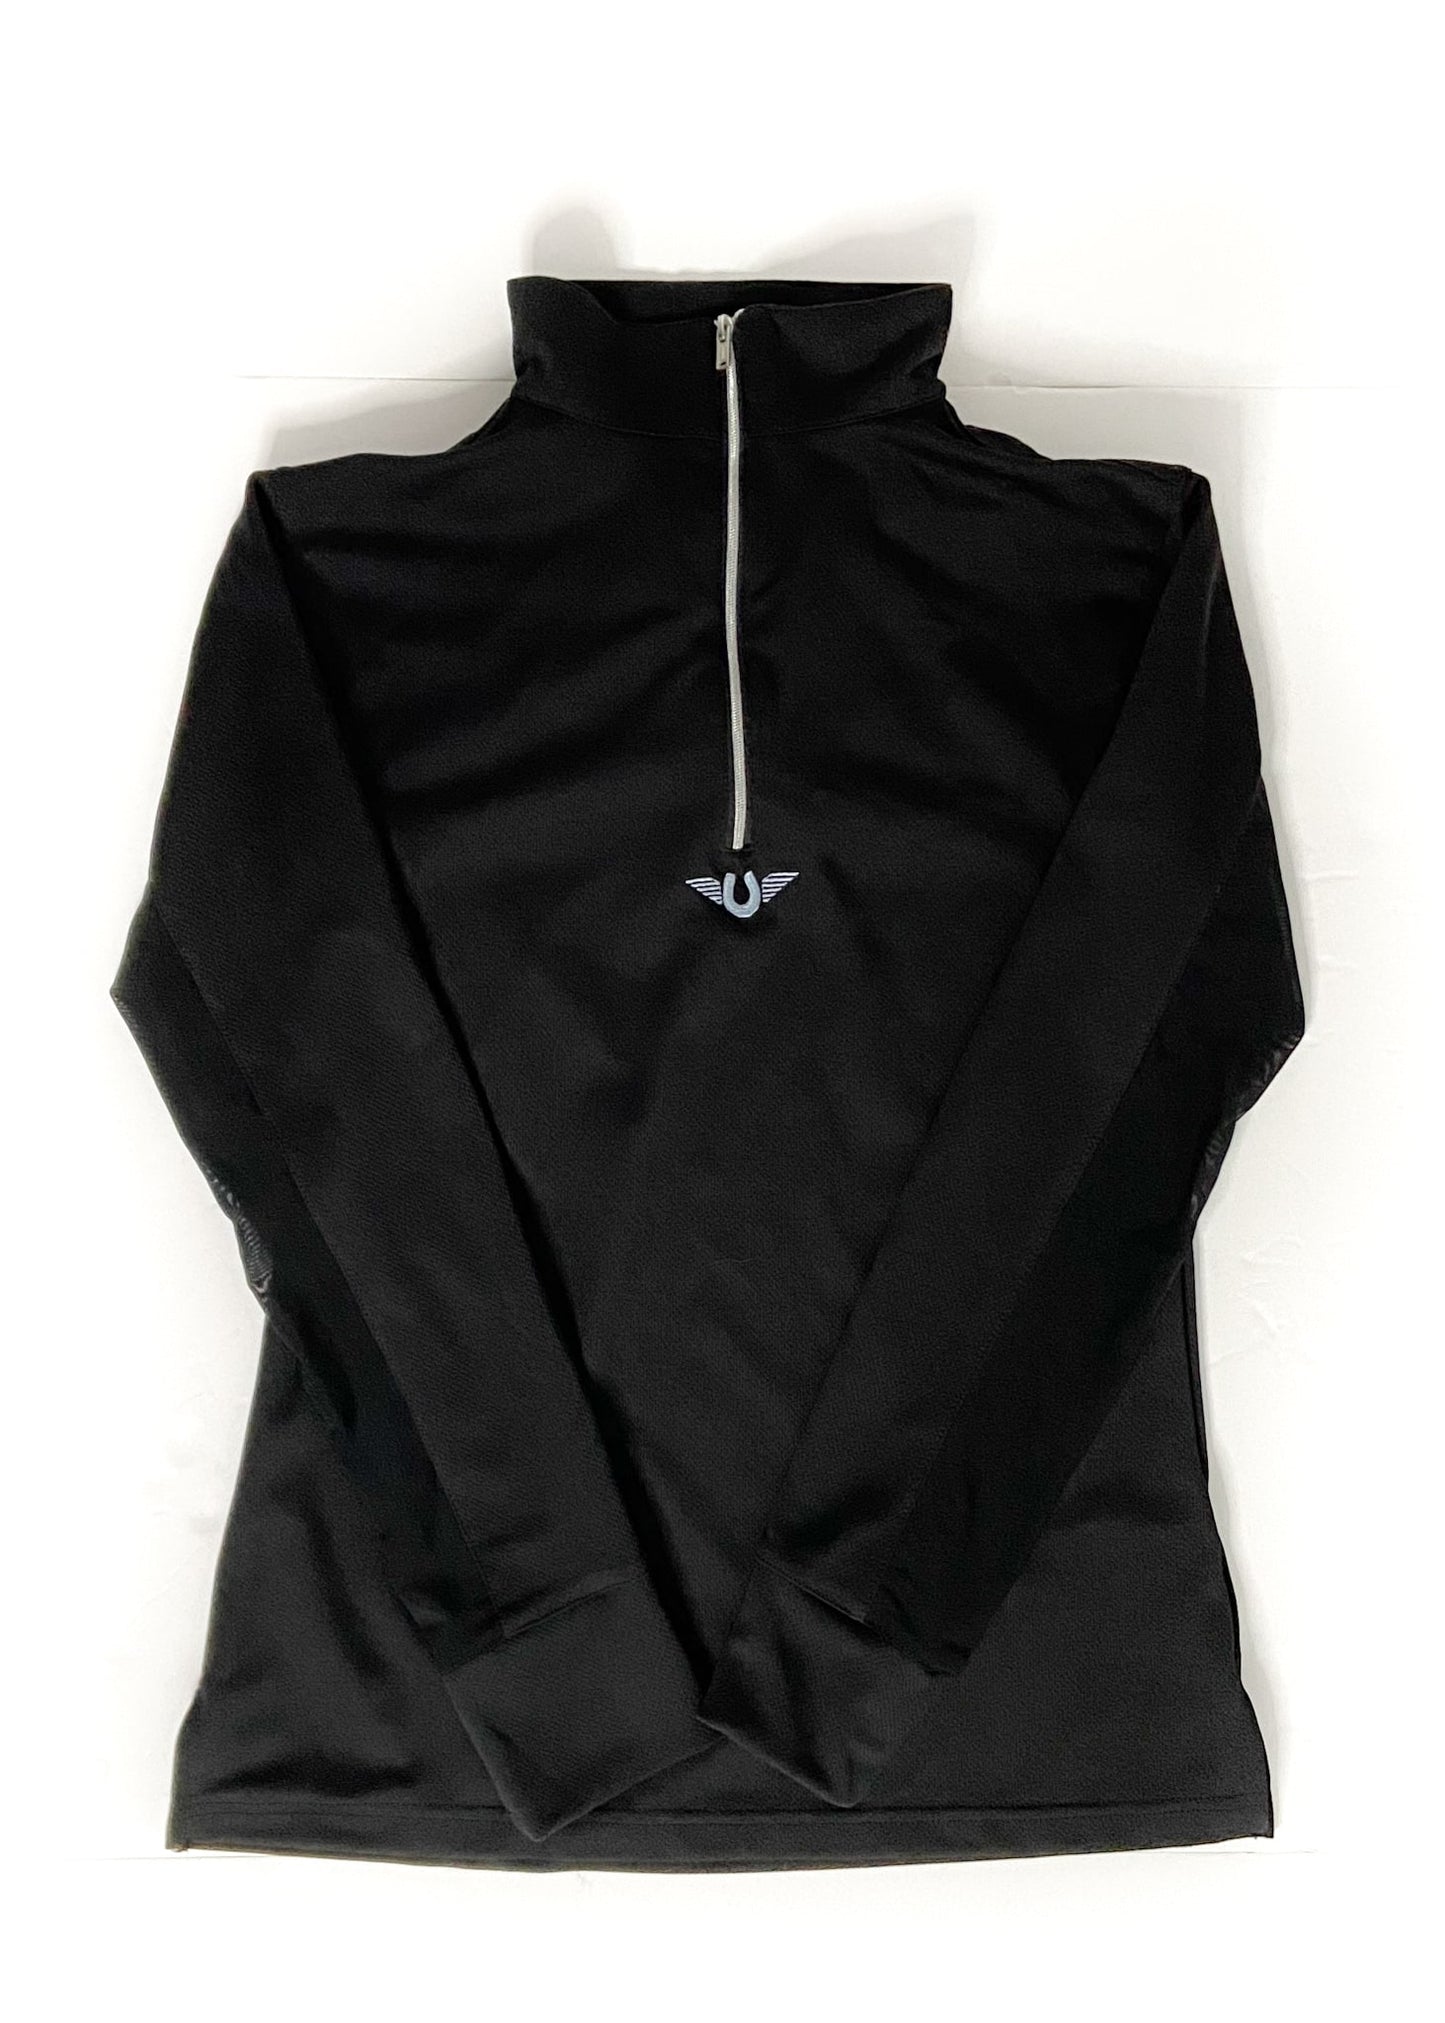 TuffRider Ventilated Technical Long Sleeve Sport Shirt - Black - Women's Small